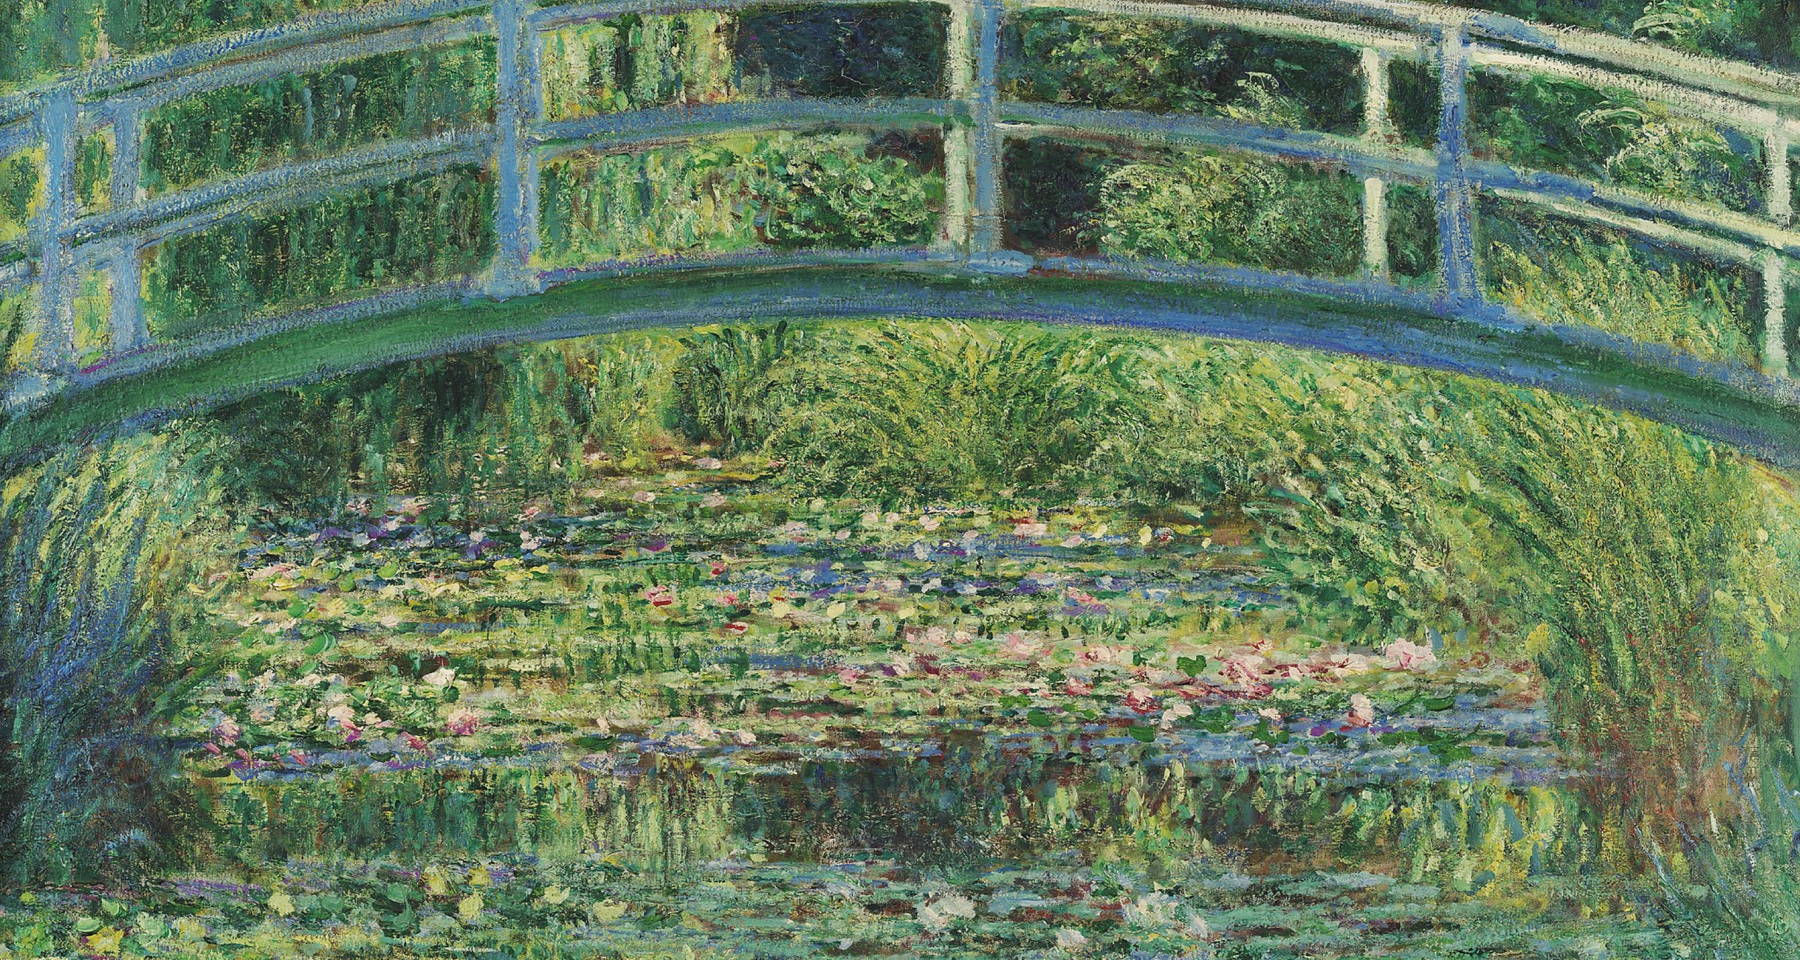 Ravel String Quartet with Monet's paintings - Multi sensory concert